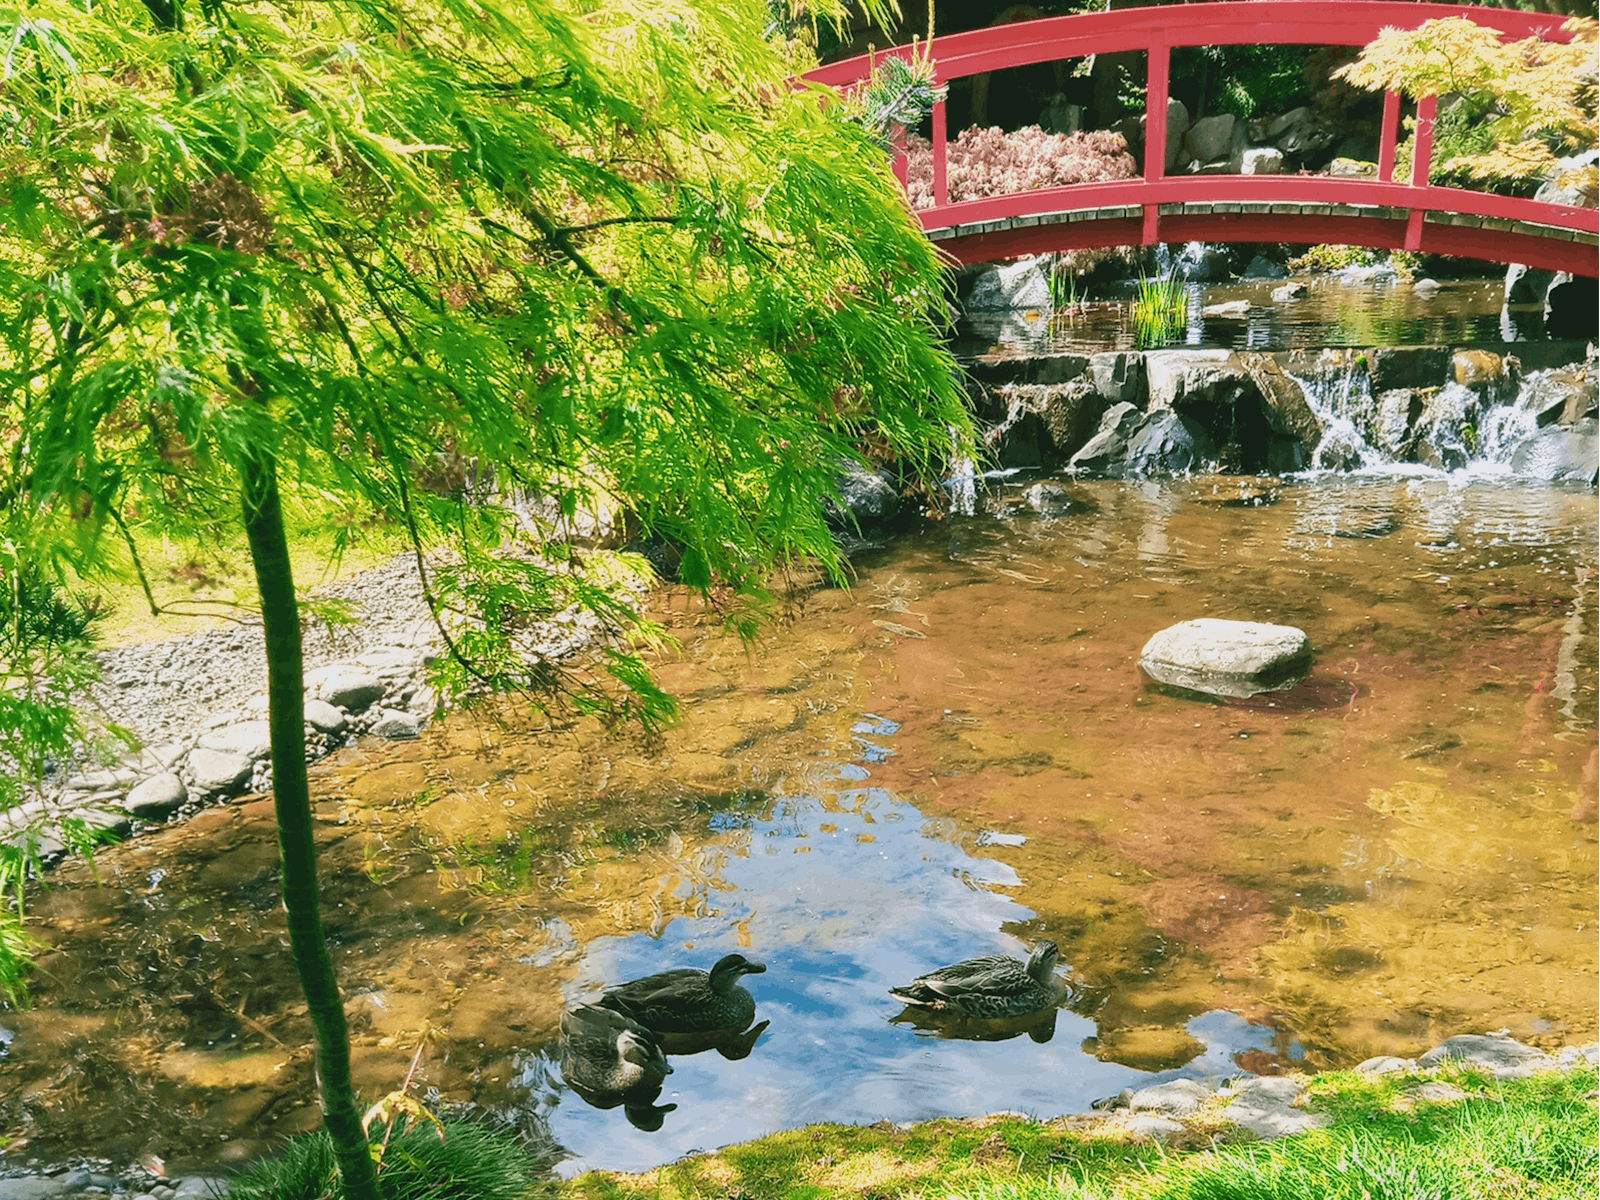 ducks in pond at Botanical Gardens